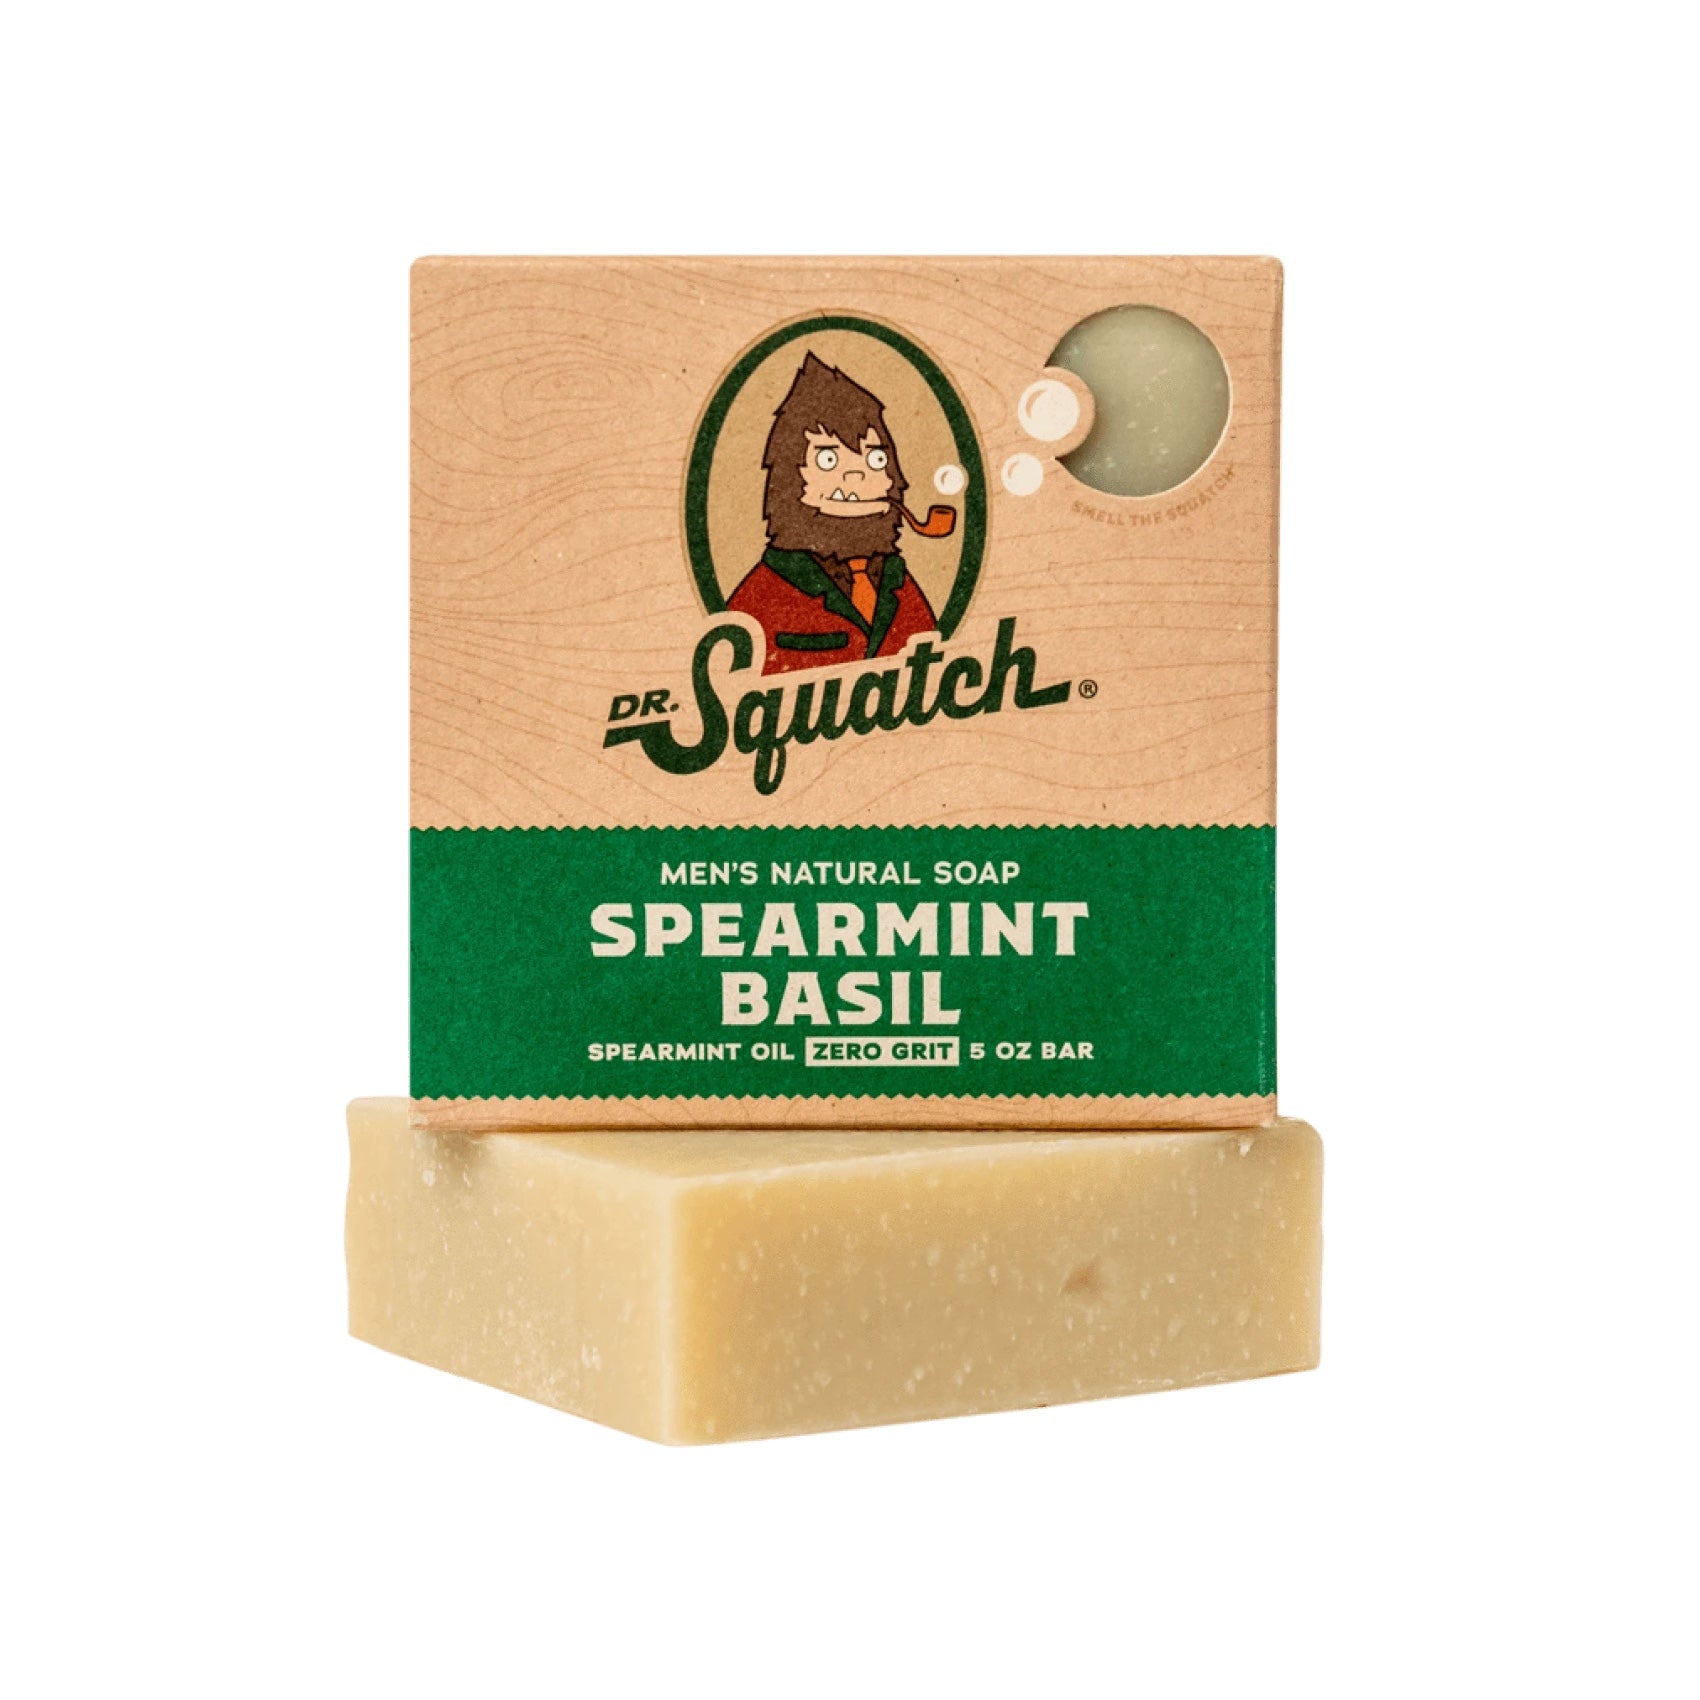 Dr. Squatch Bar Soap — simplified